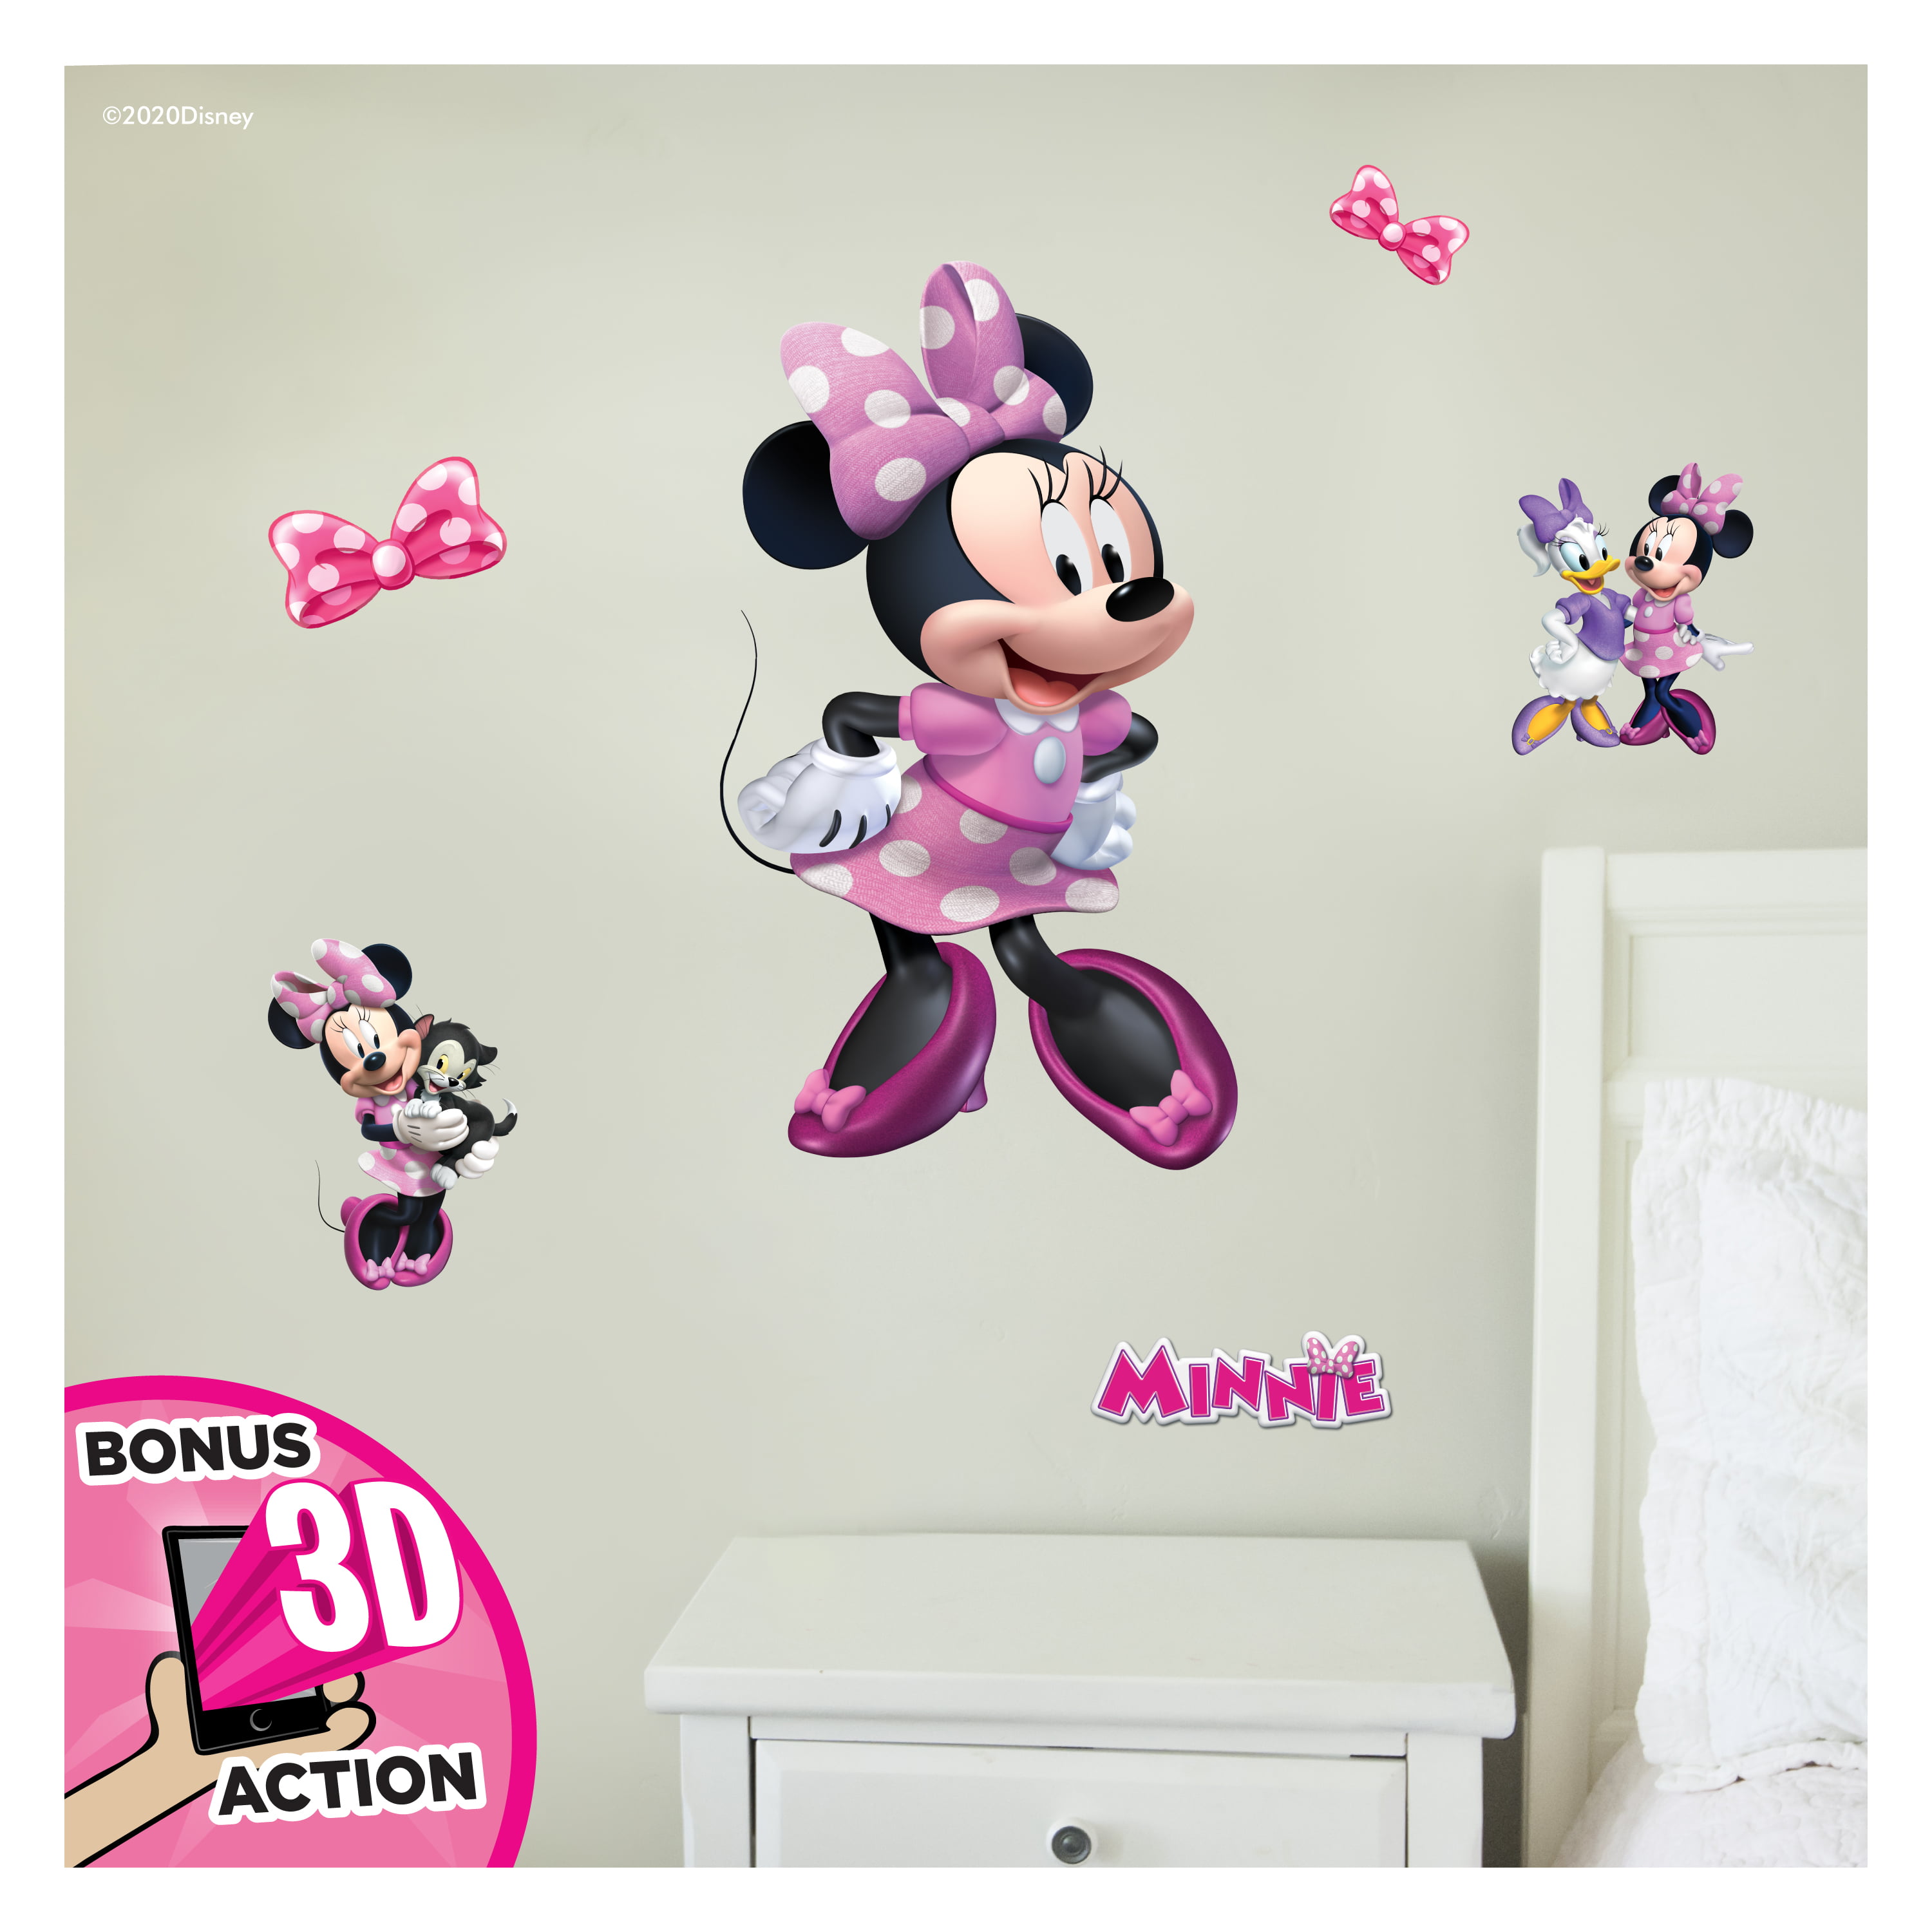 Disney Wall Decal  Mickey and Minnie Decal  Mickey Mouse Decal  Mickey and Minnie Mouse Peeking Decal  Disney Decor  Disney Gift